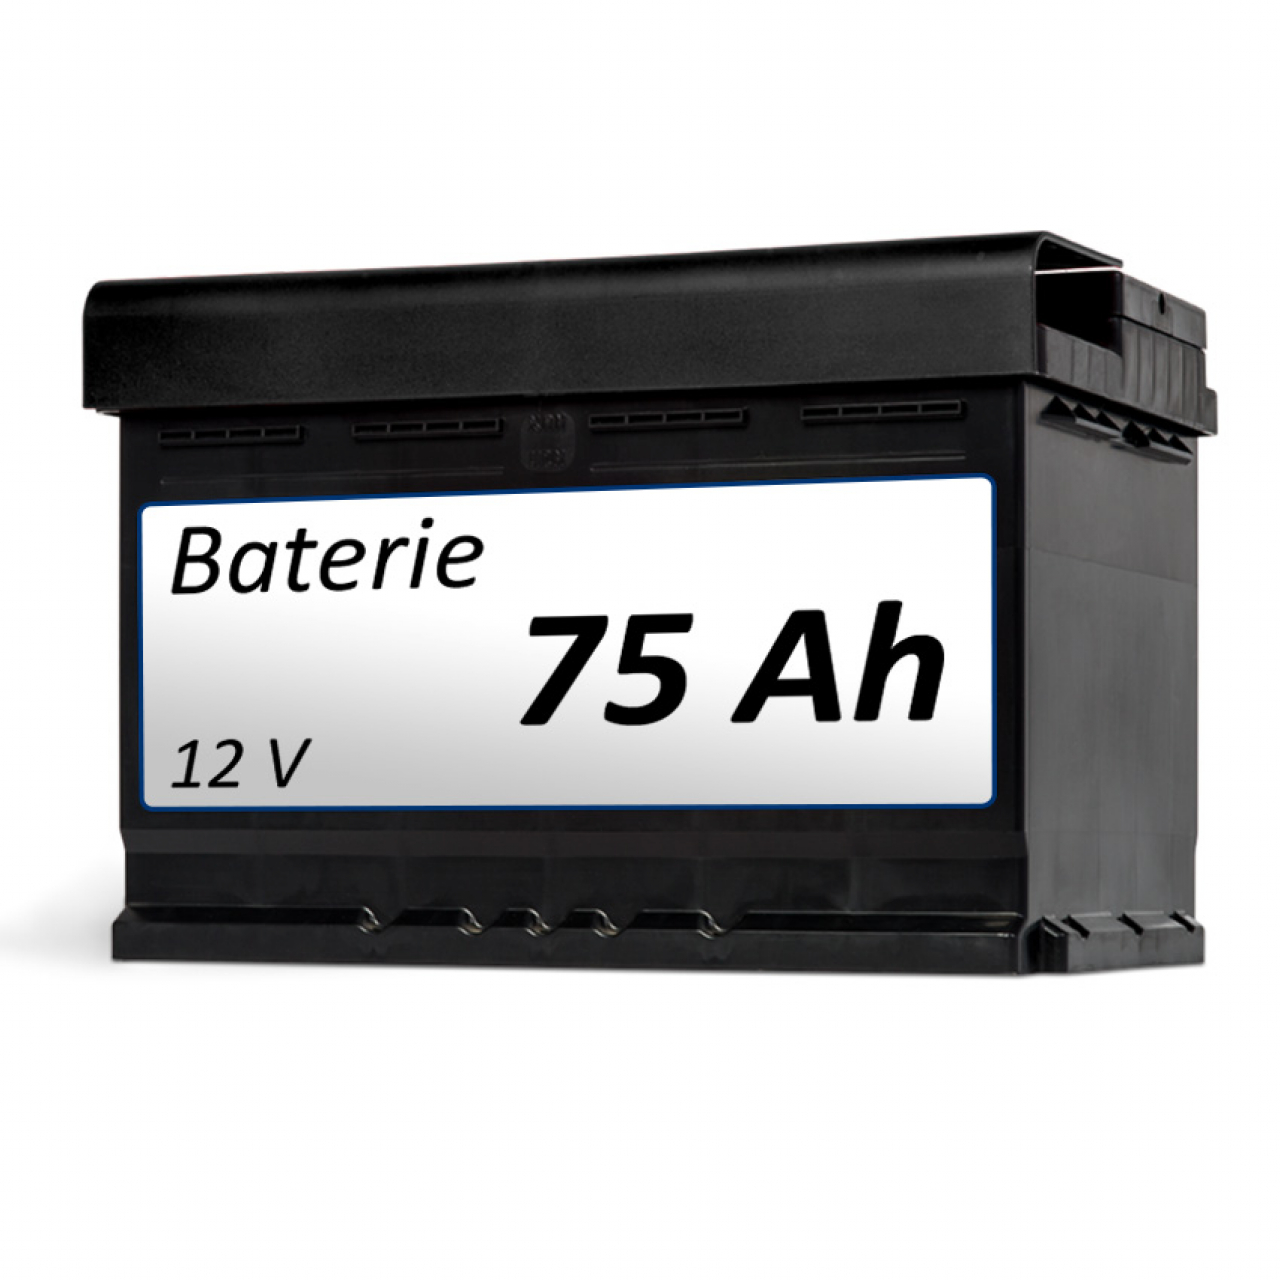 Baterie Batéria 75 Ah - samostatne foto